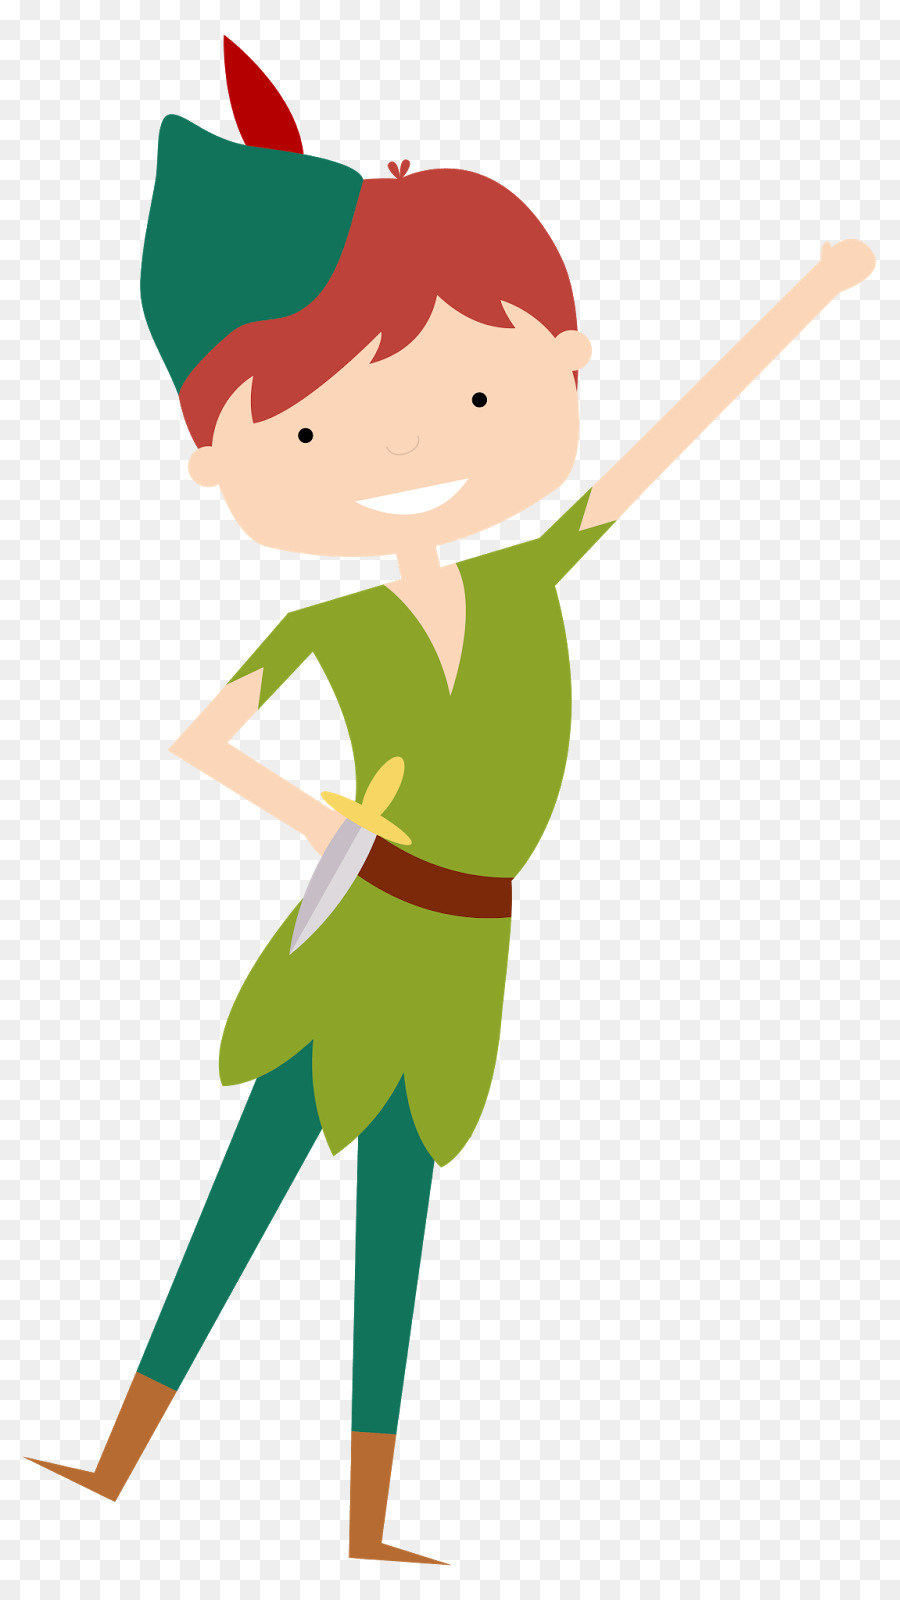 Peter Pan Captain Hook Wendy Darling Tinker Bell Clip art - peter pan png download - 891*1600 - Free Transparent Peter Pan png Download.